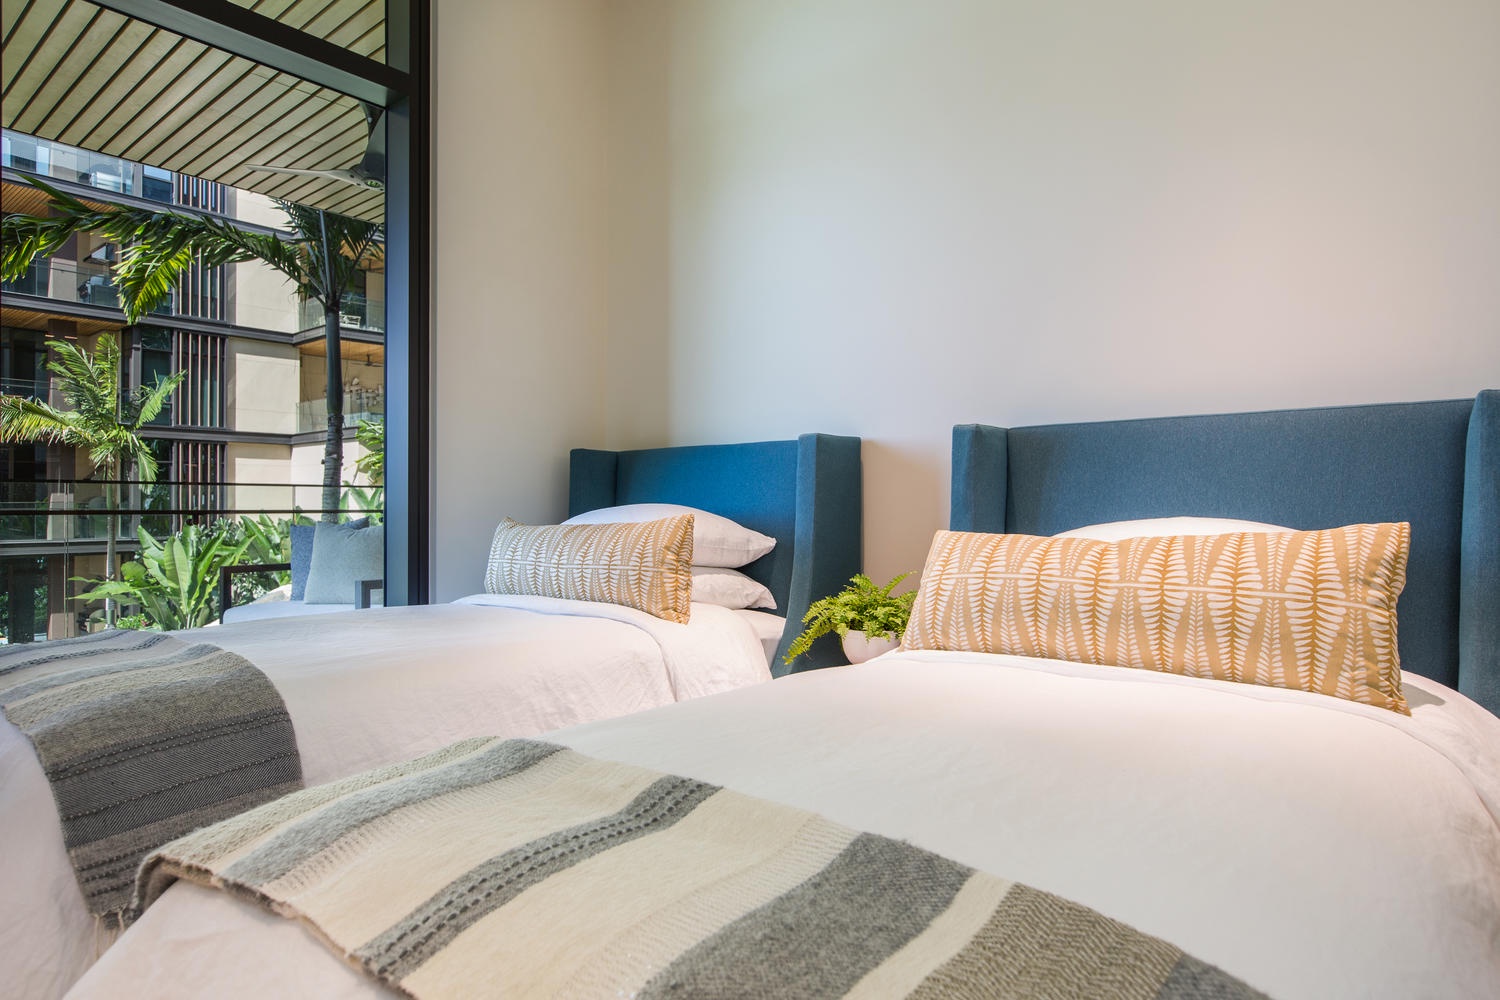 Honolulu Vacation Rentals, Park Lane Palm Resort - Guest Bedroom